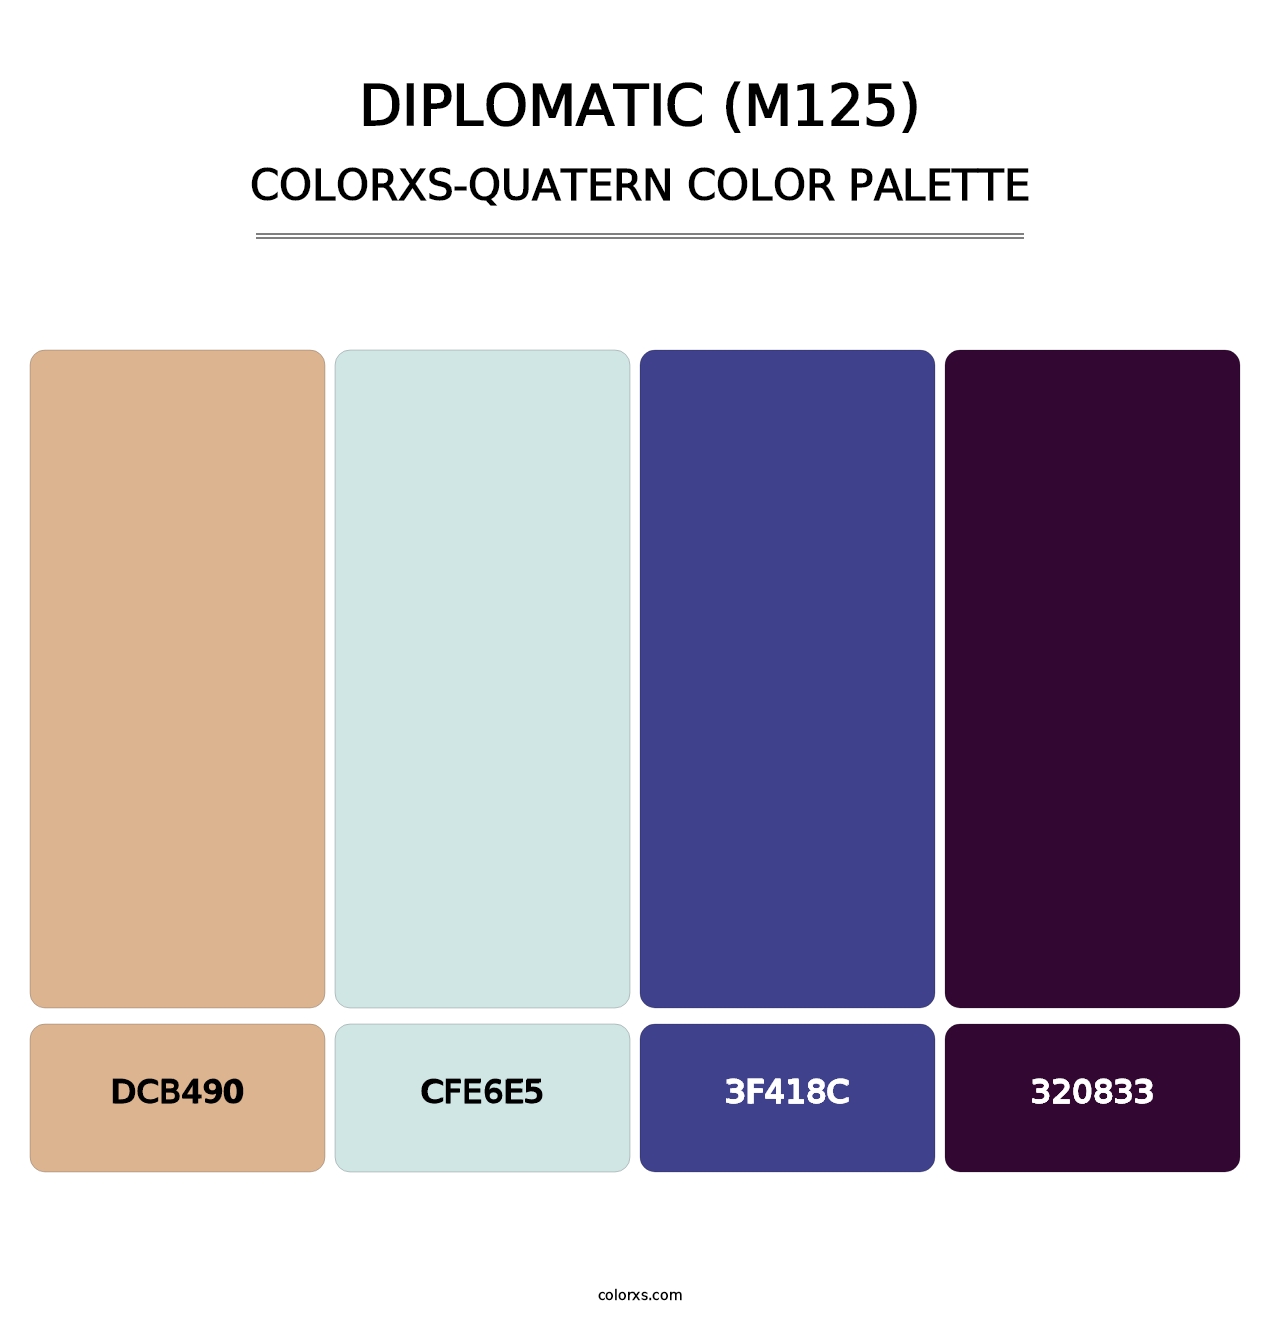 Diplomatic (M125) - Colorxs Quatern Palette